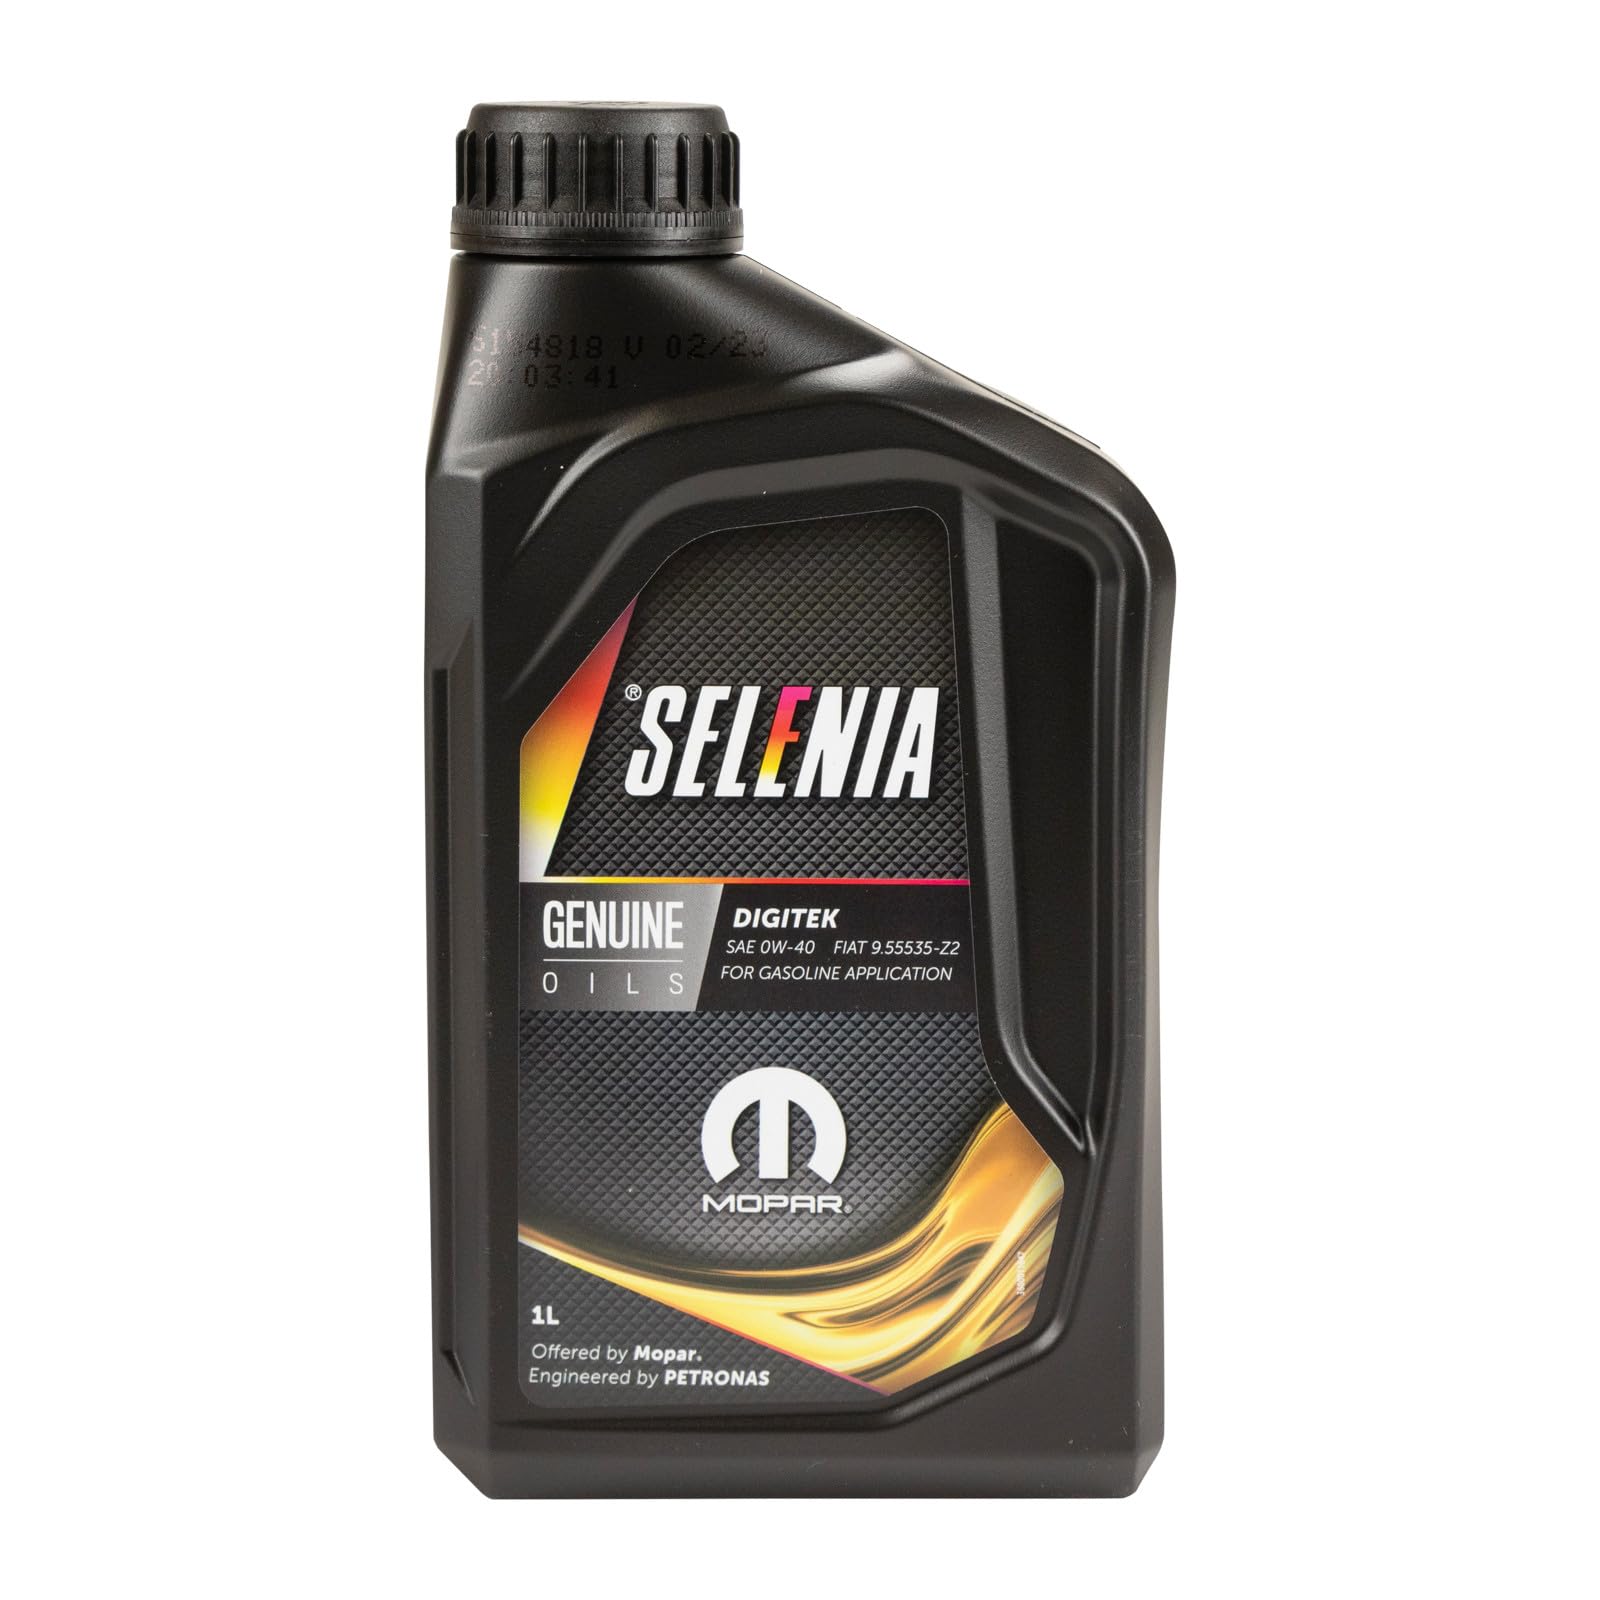 Selenia Petronas Motoröl Öl Digitek 0W40 1L 1 Liter A3/B4 SN 9.55535-Z2 von Selenia